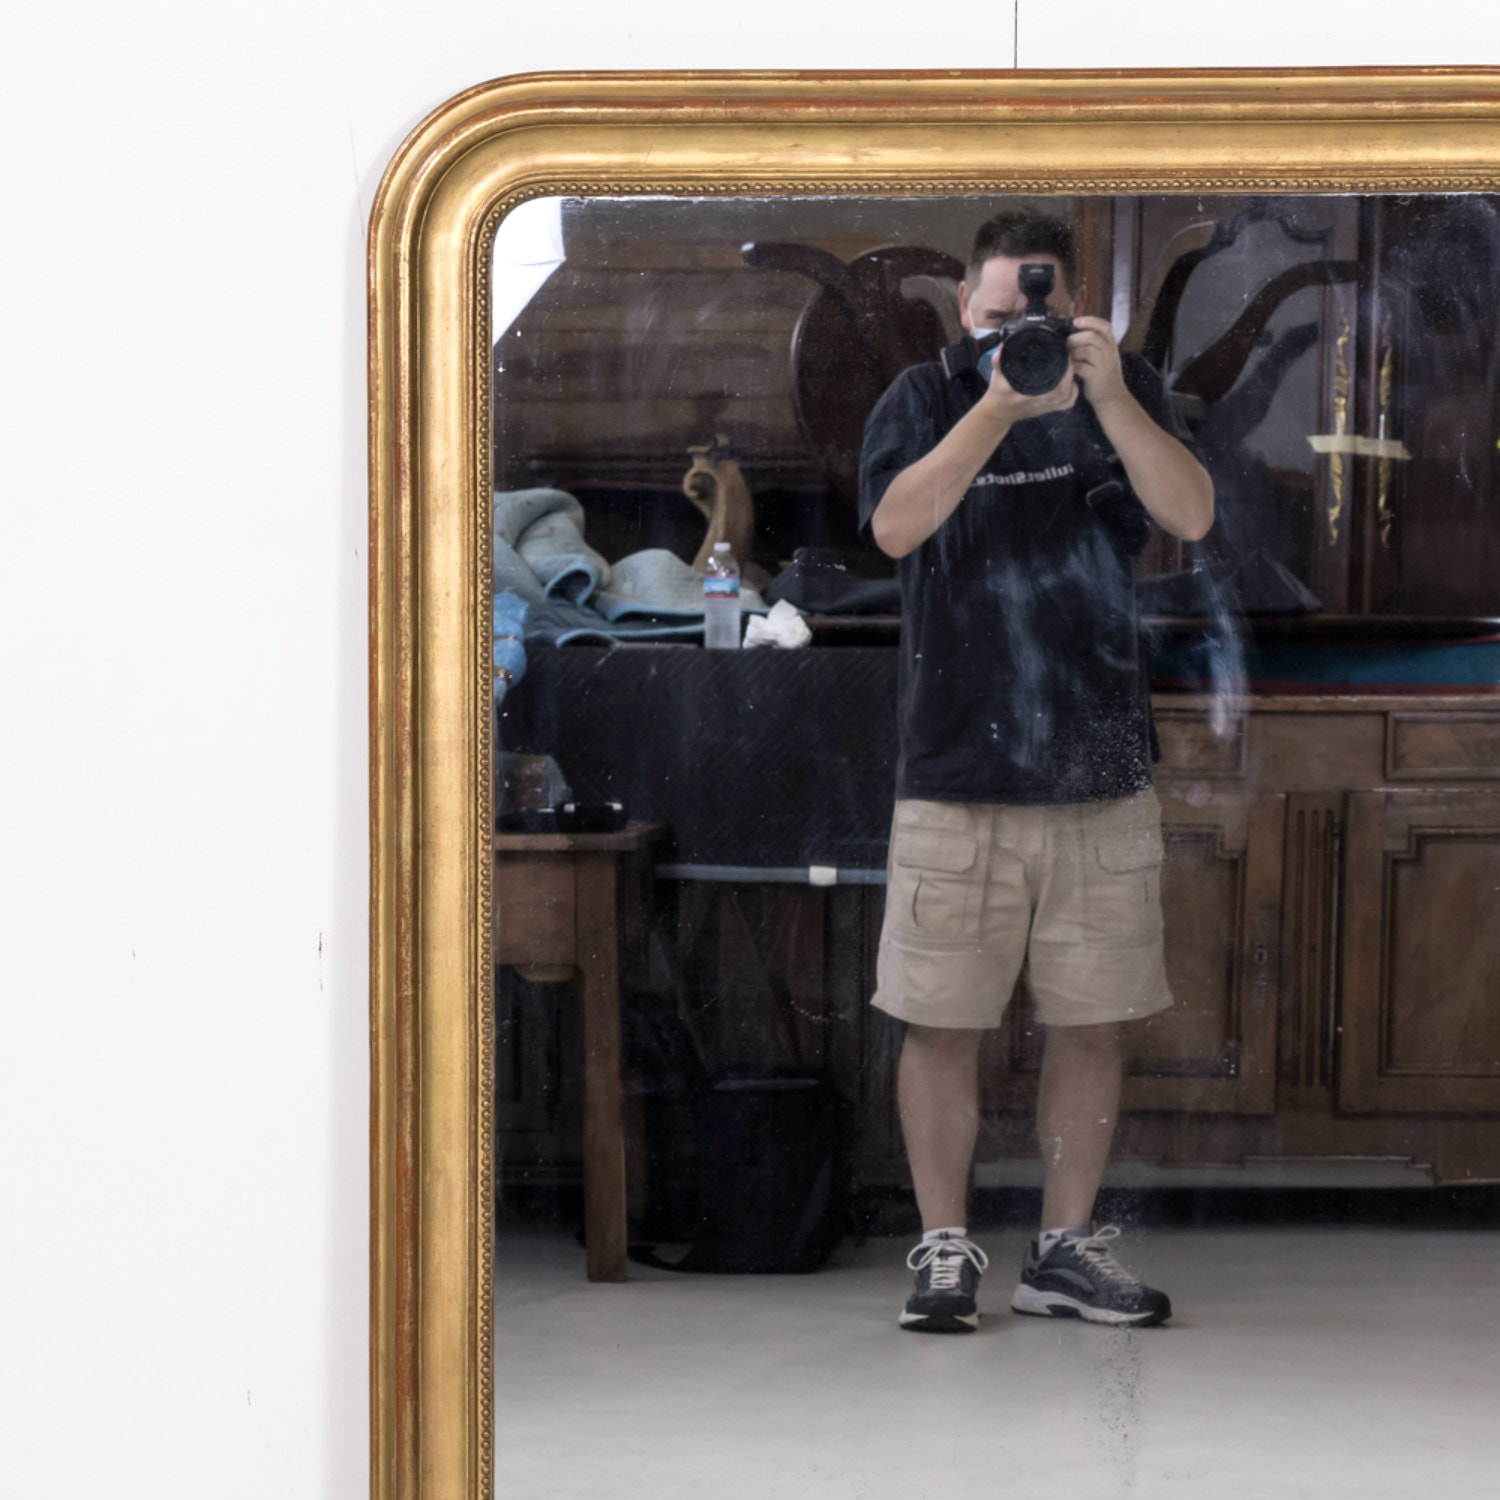 19th century Louis Philippe mirror w/ gold frame 29¼ x 20 – Chez